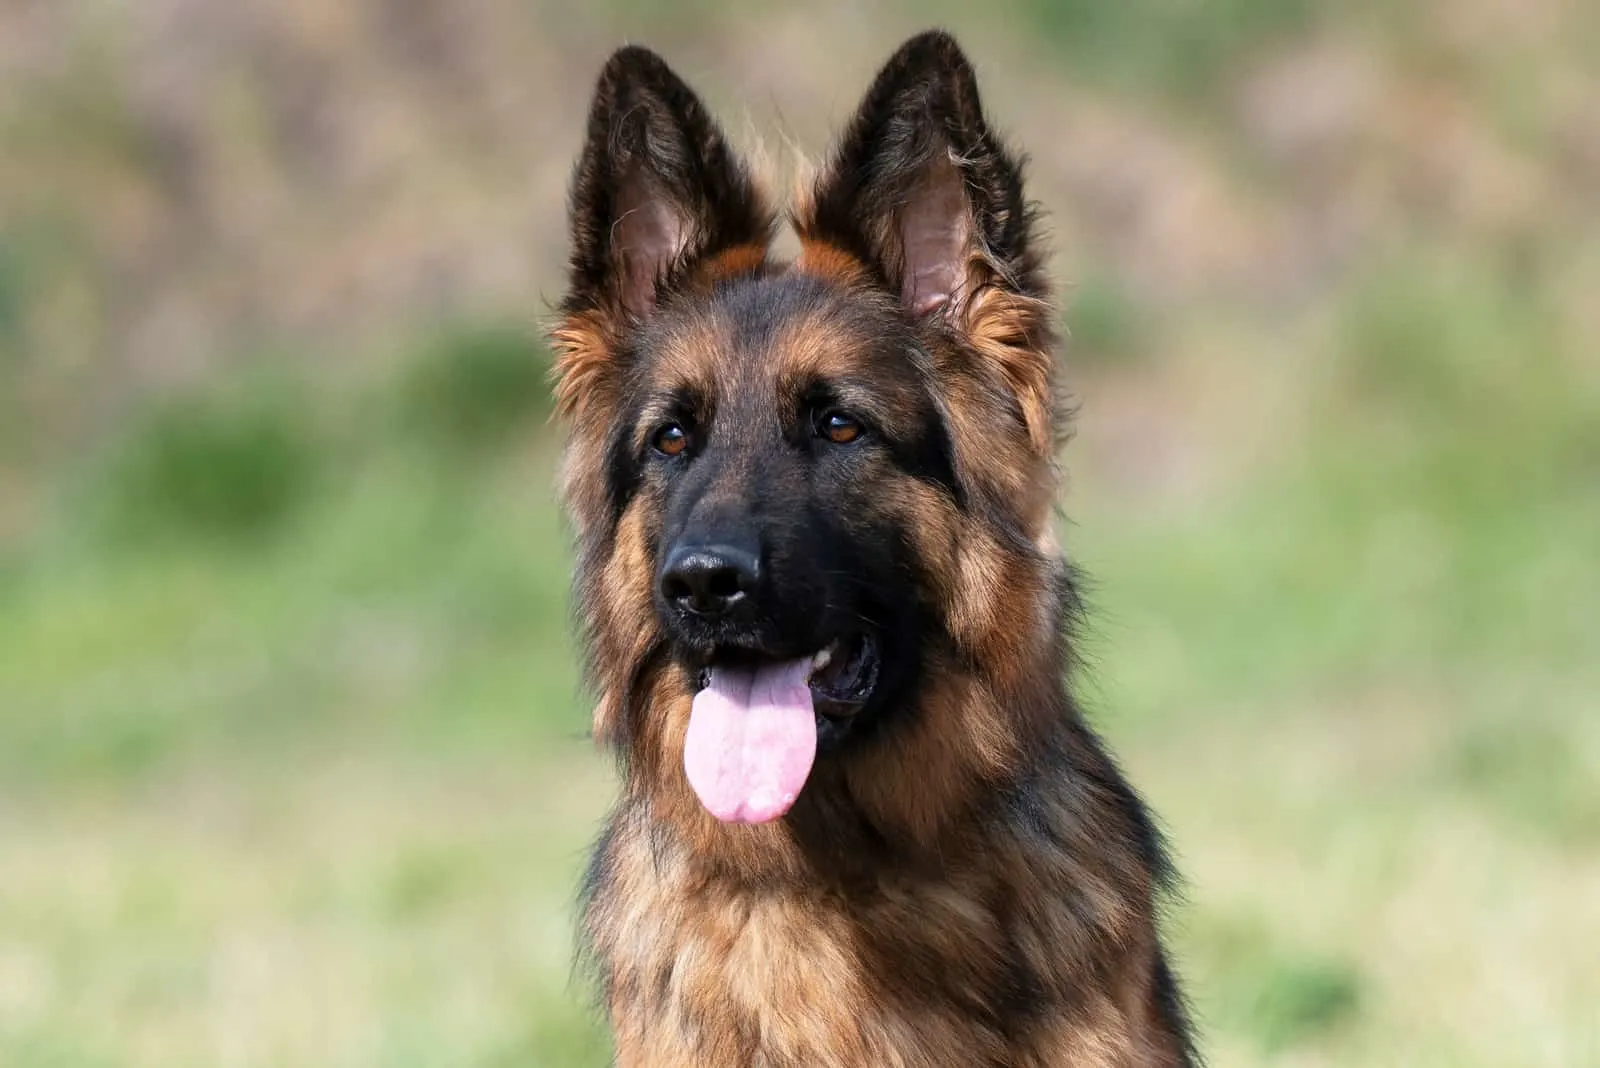 German Shepherd dog outdoors